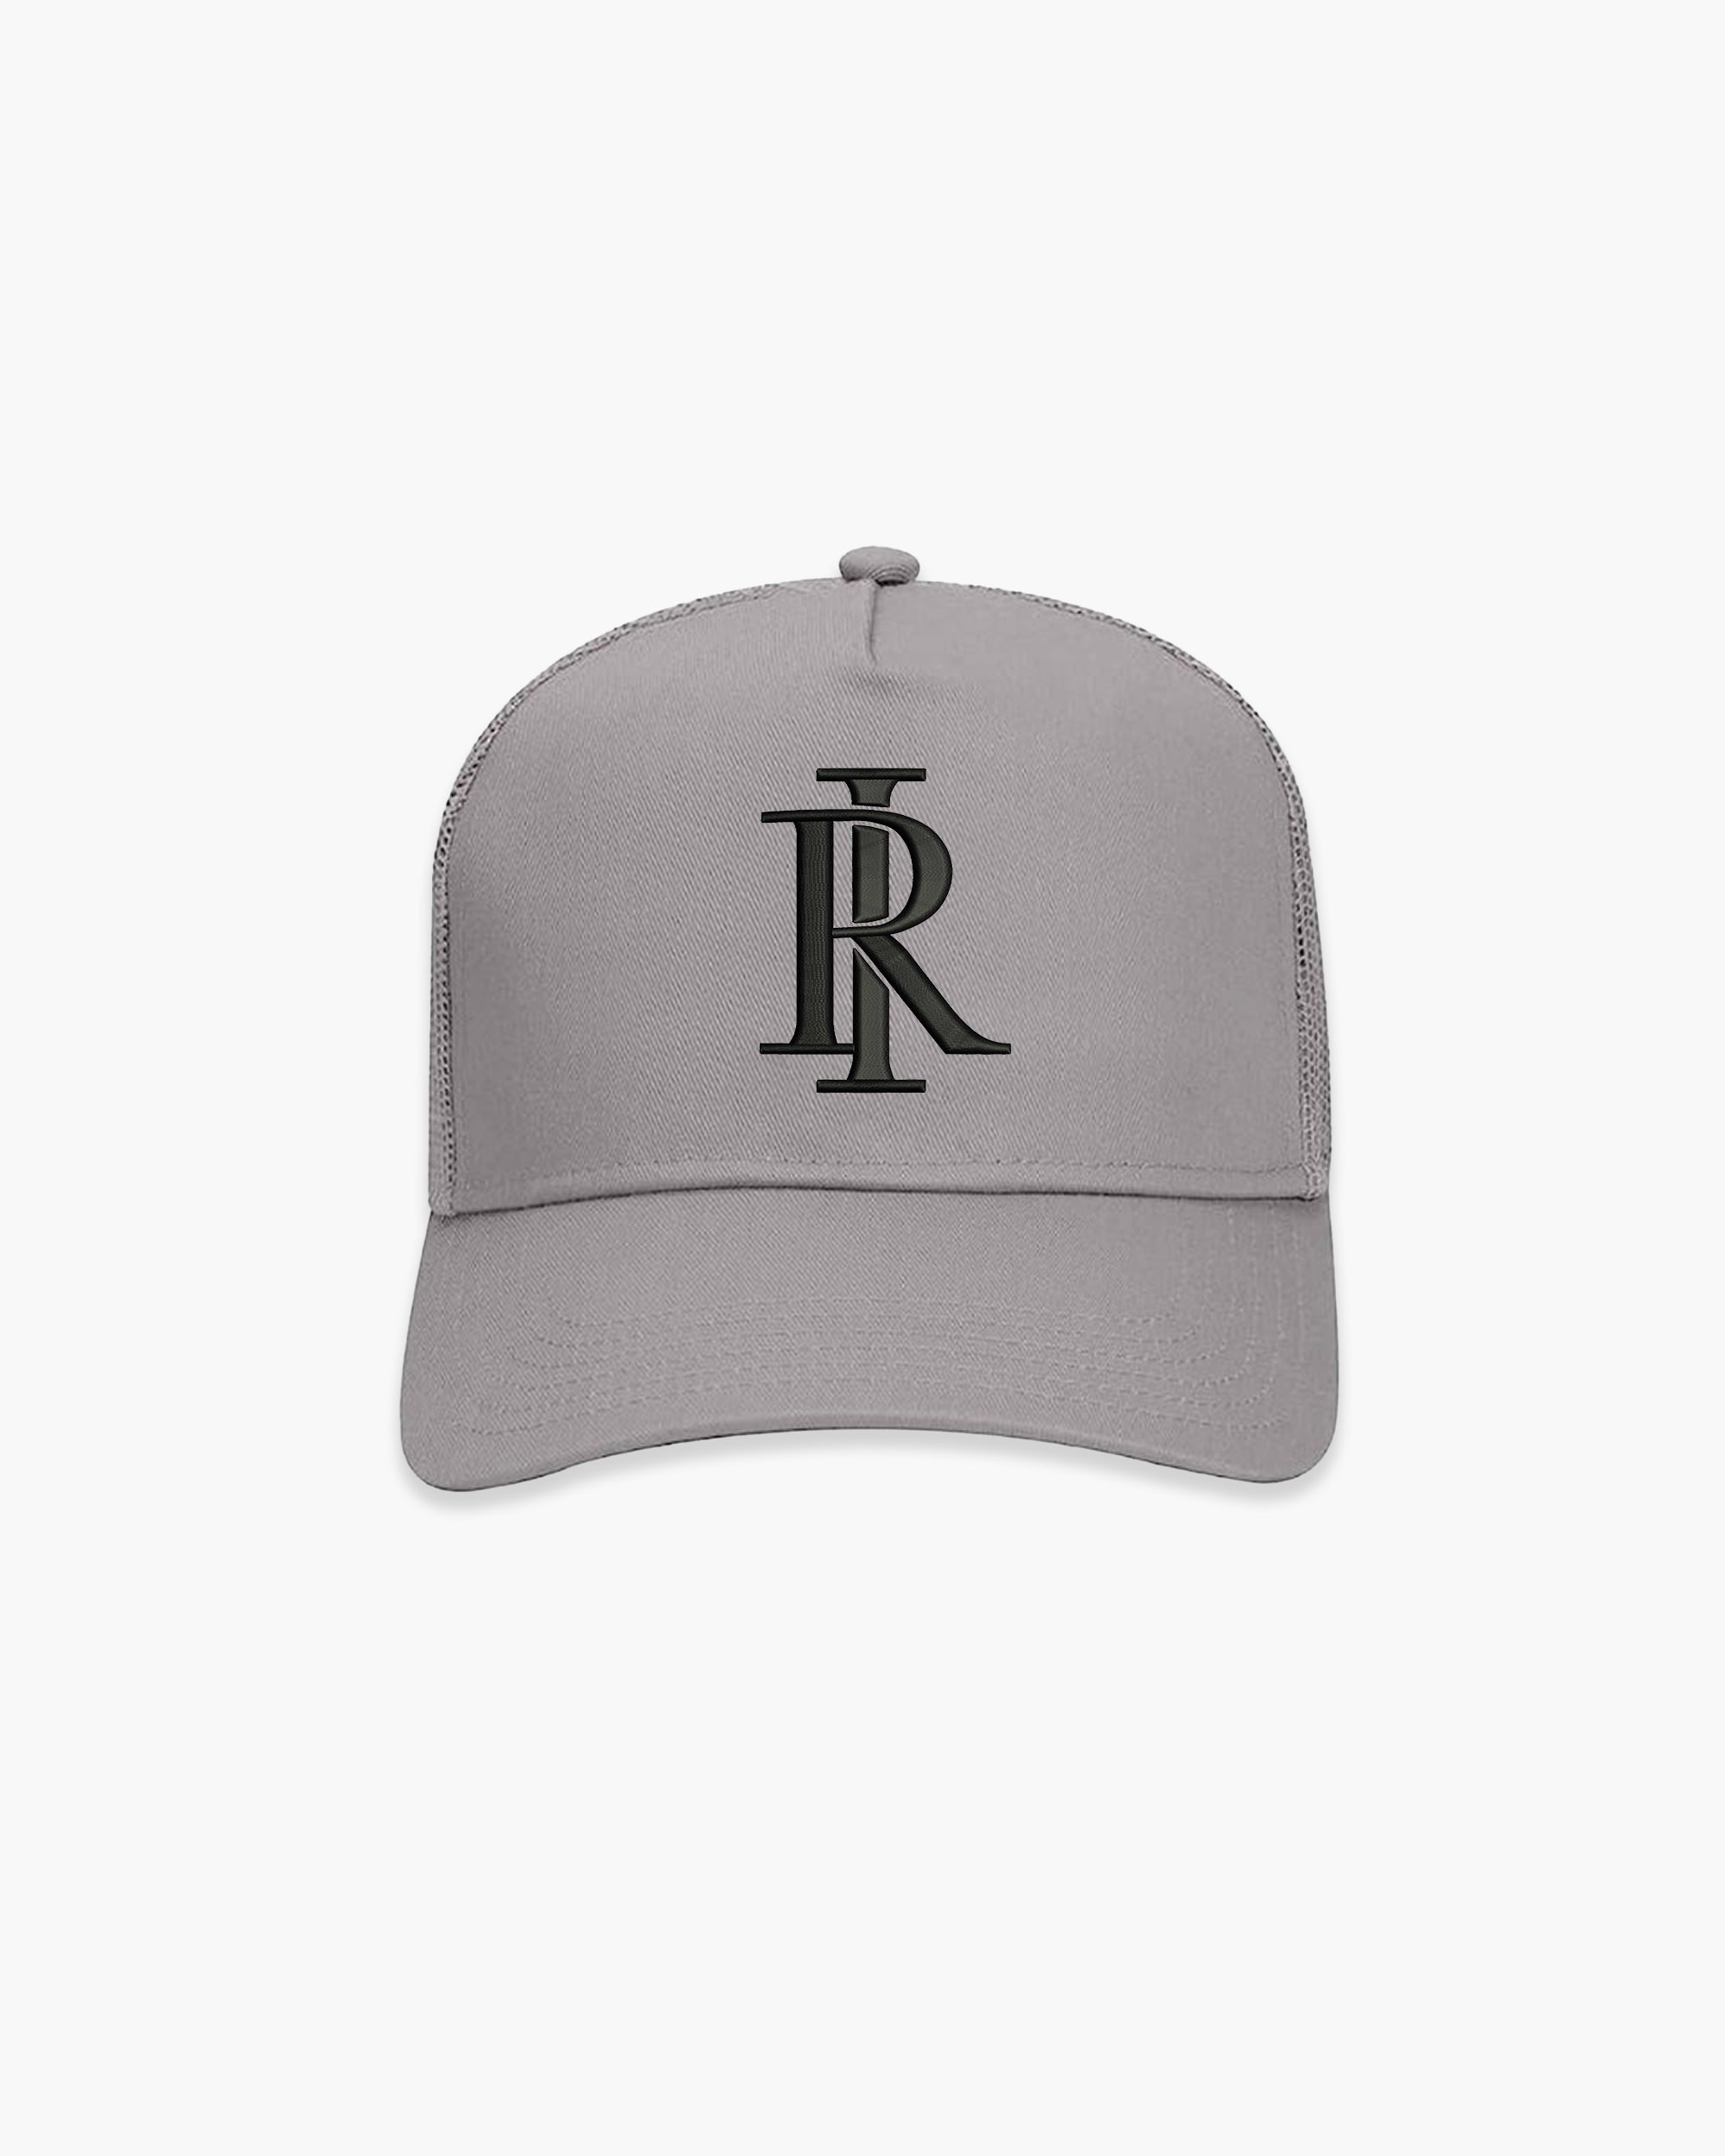 Monogram Trucker Hat - Grey